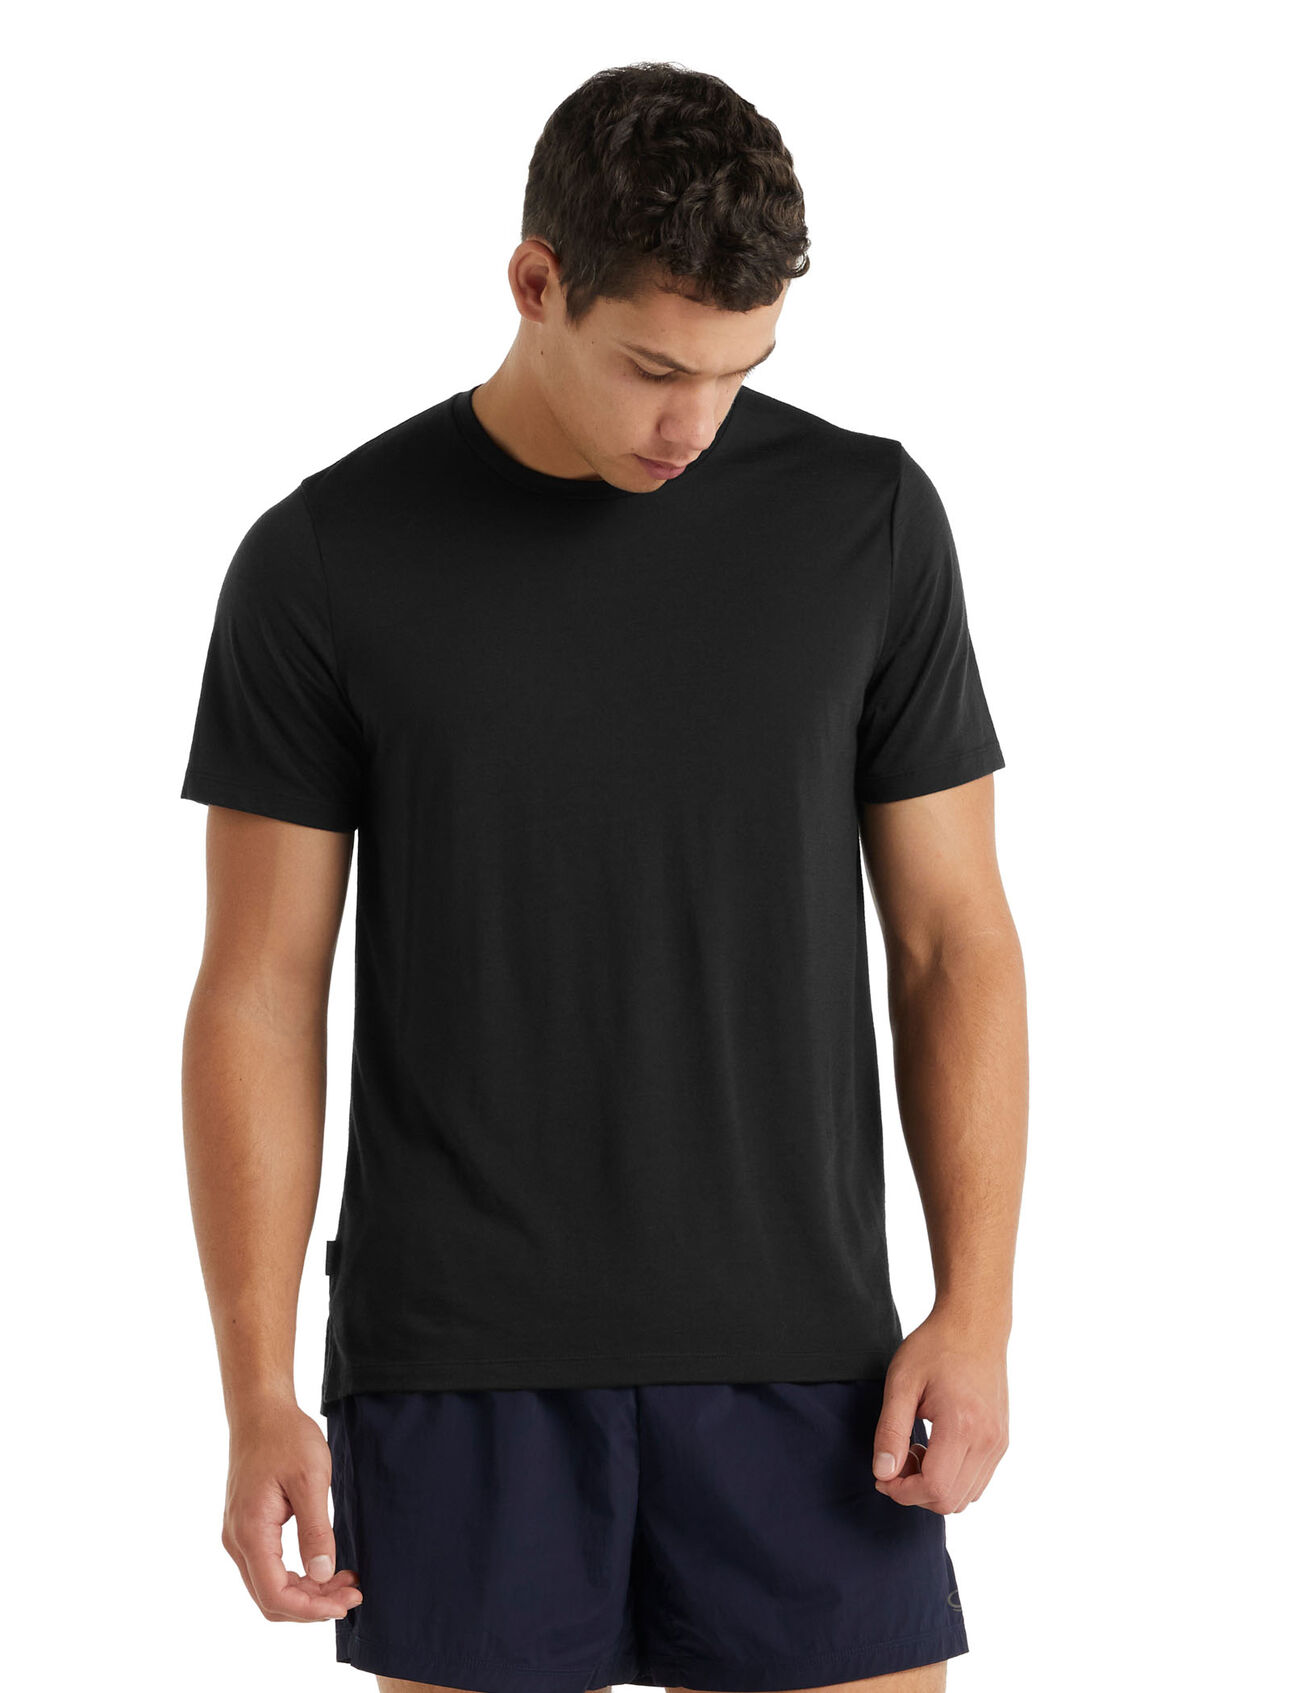 Cool-Lite™ Merino Sphere T-Shirt